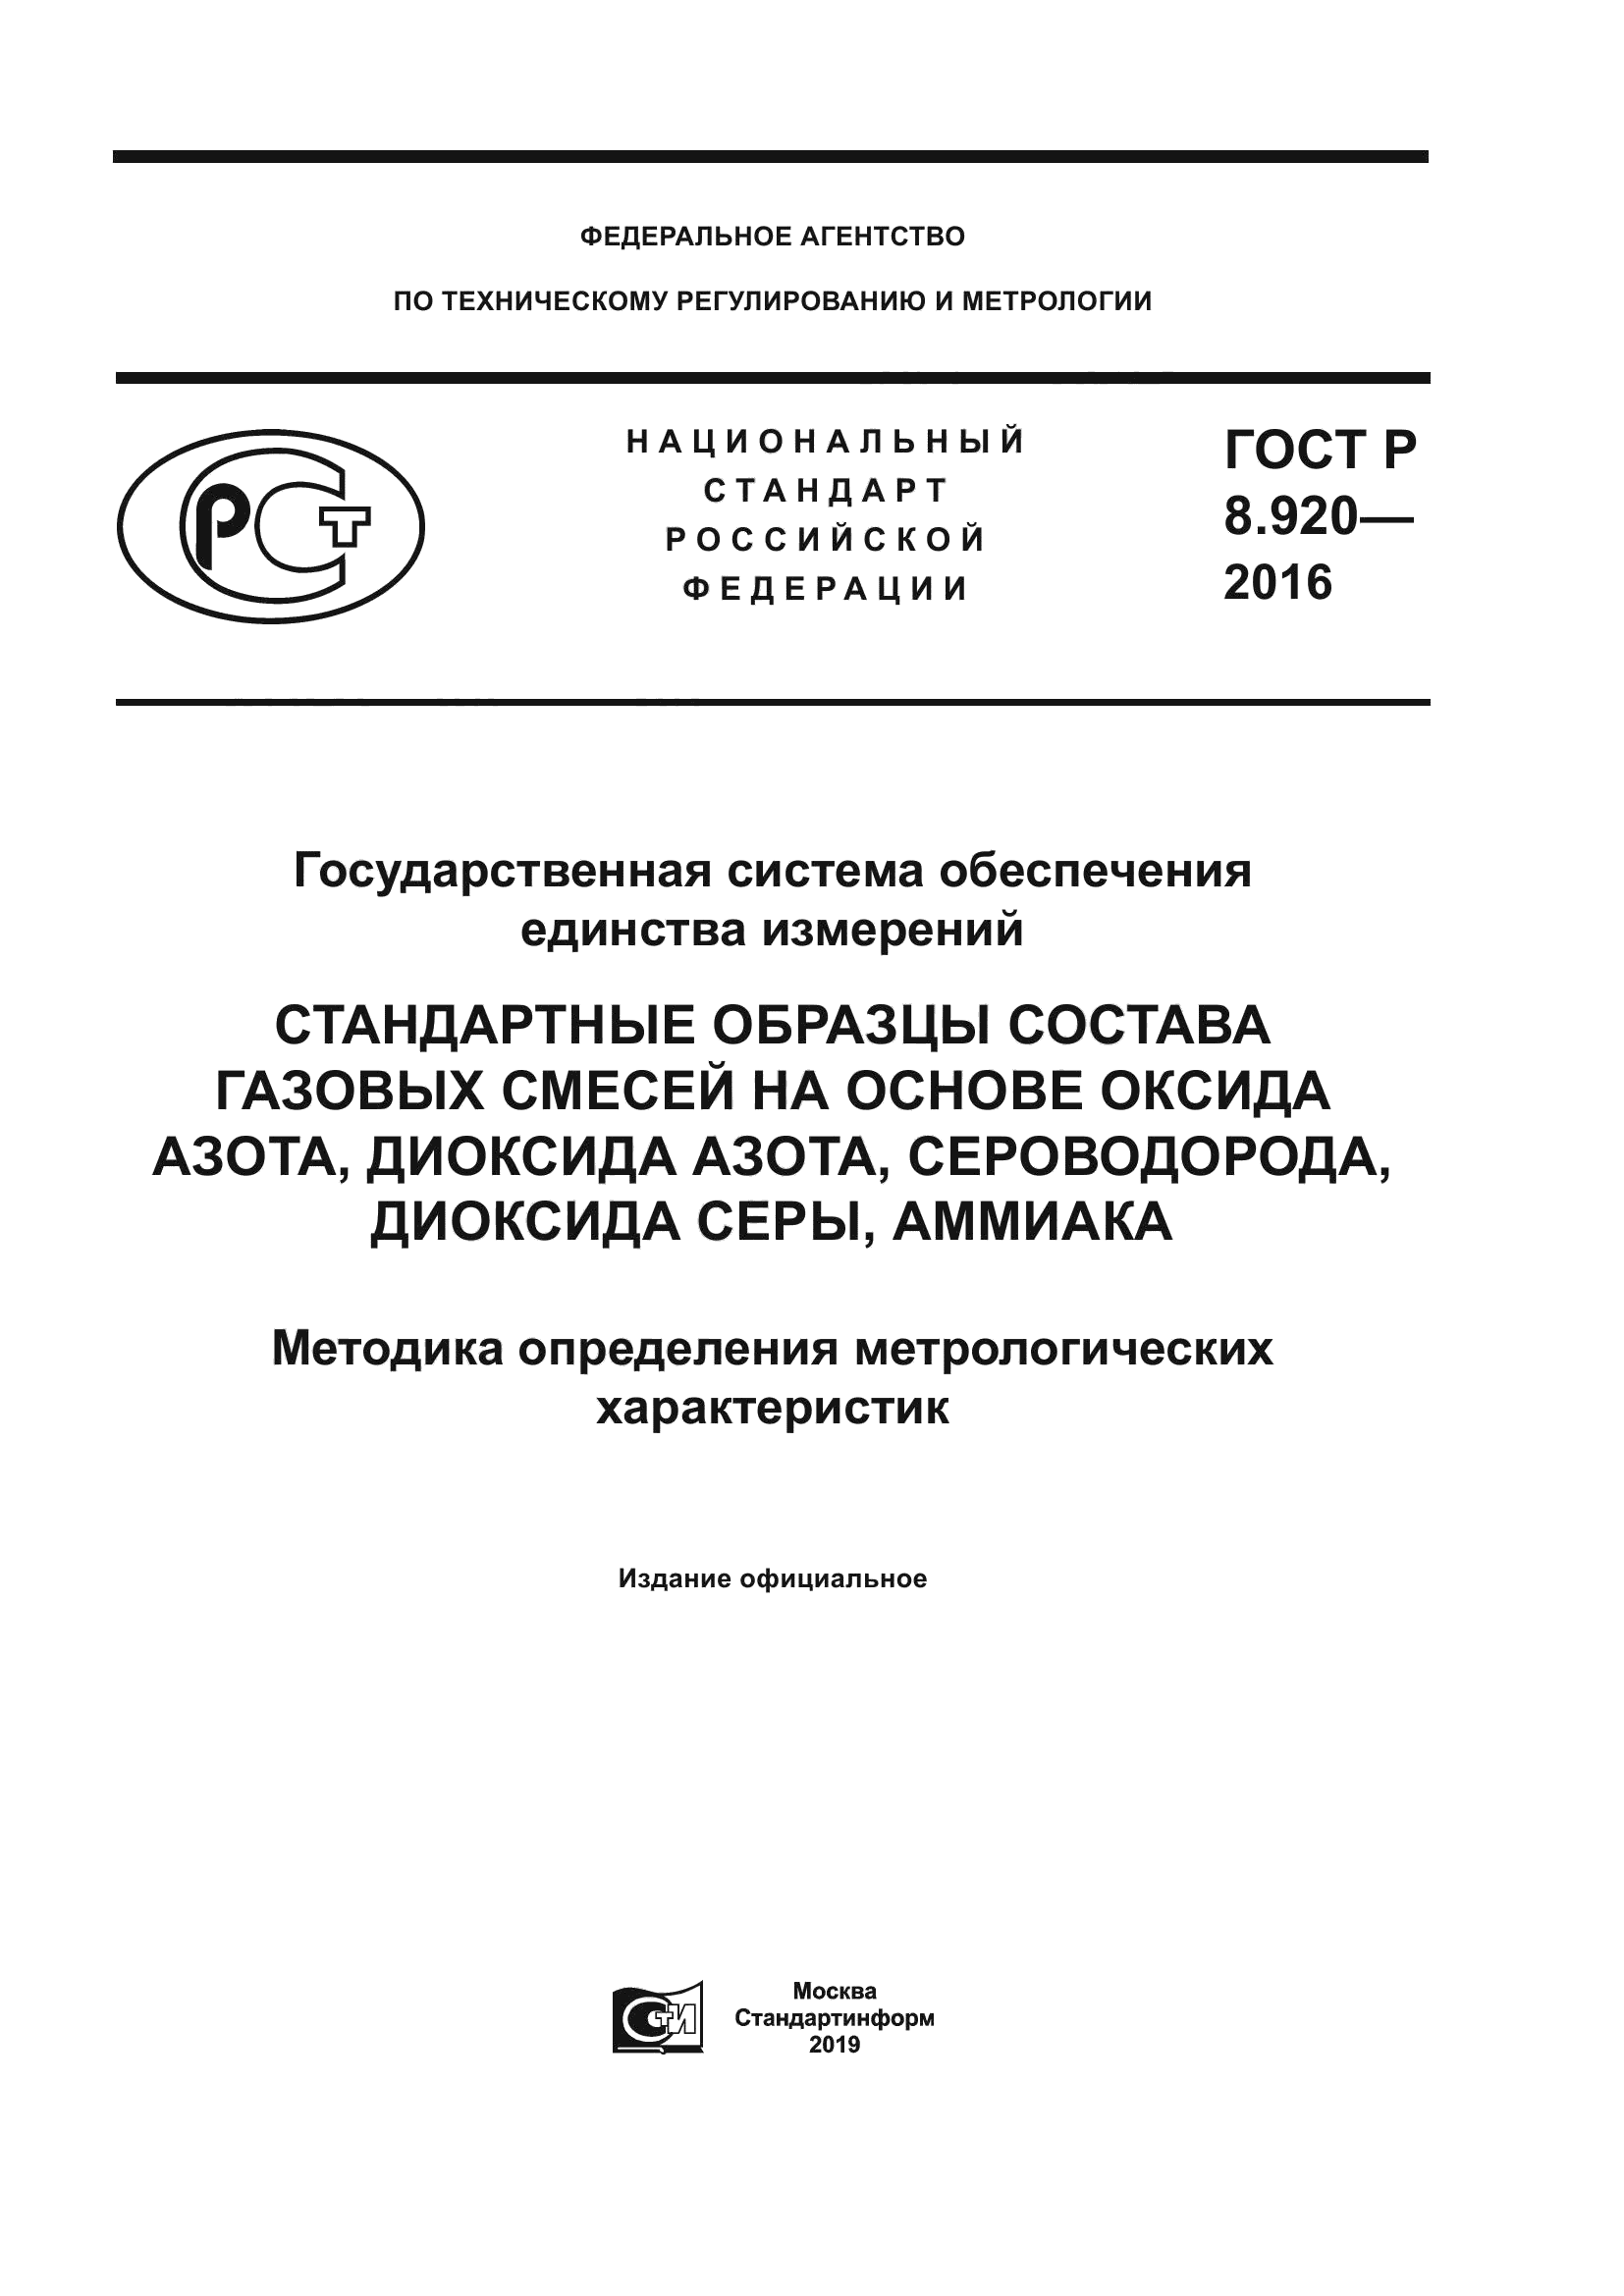 ГОСТ Р 8.920-2016